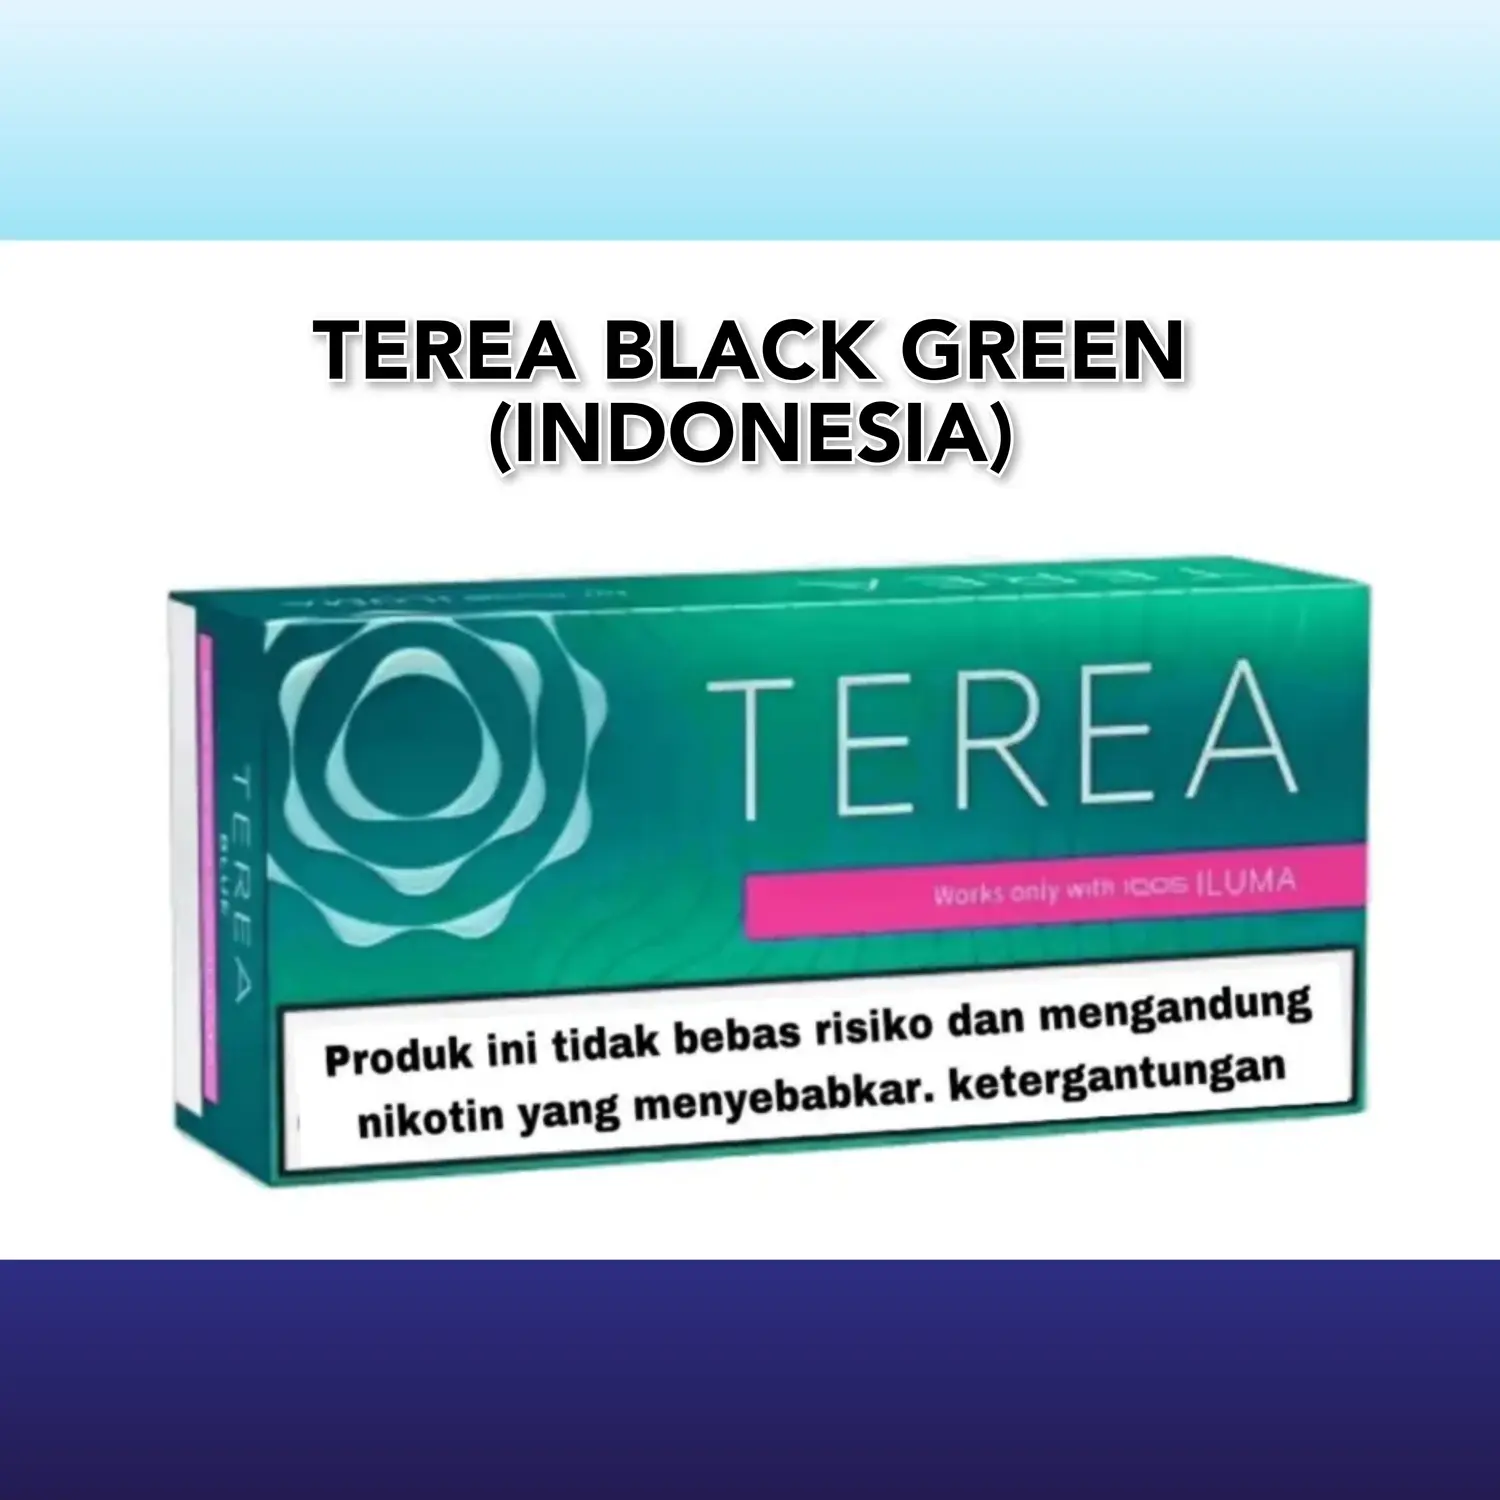 IQOS Terea Black Green